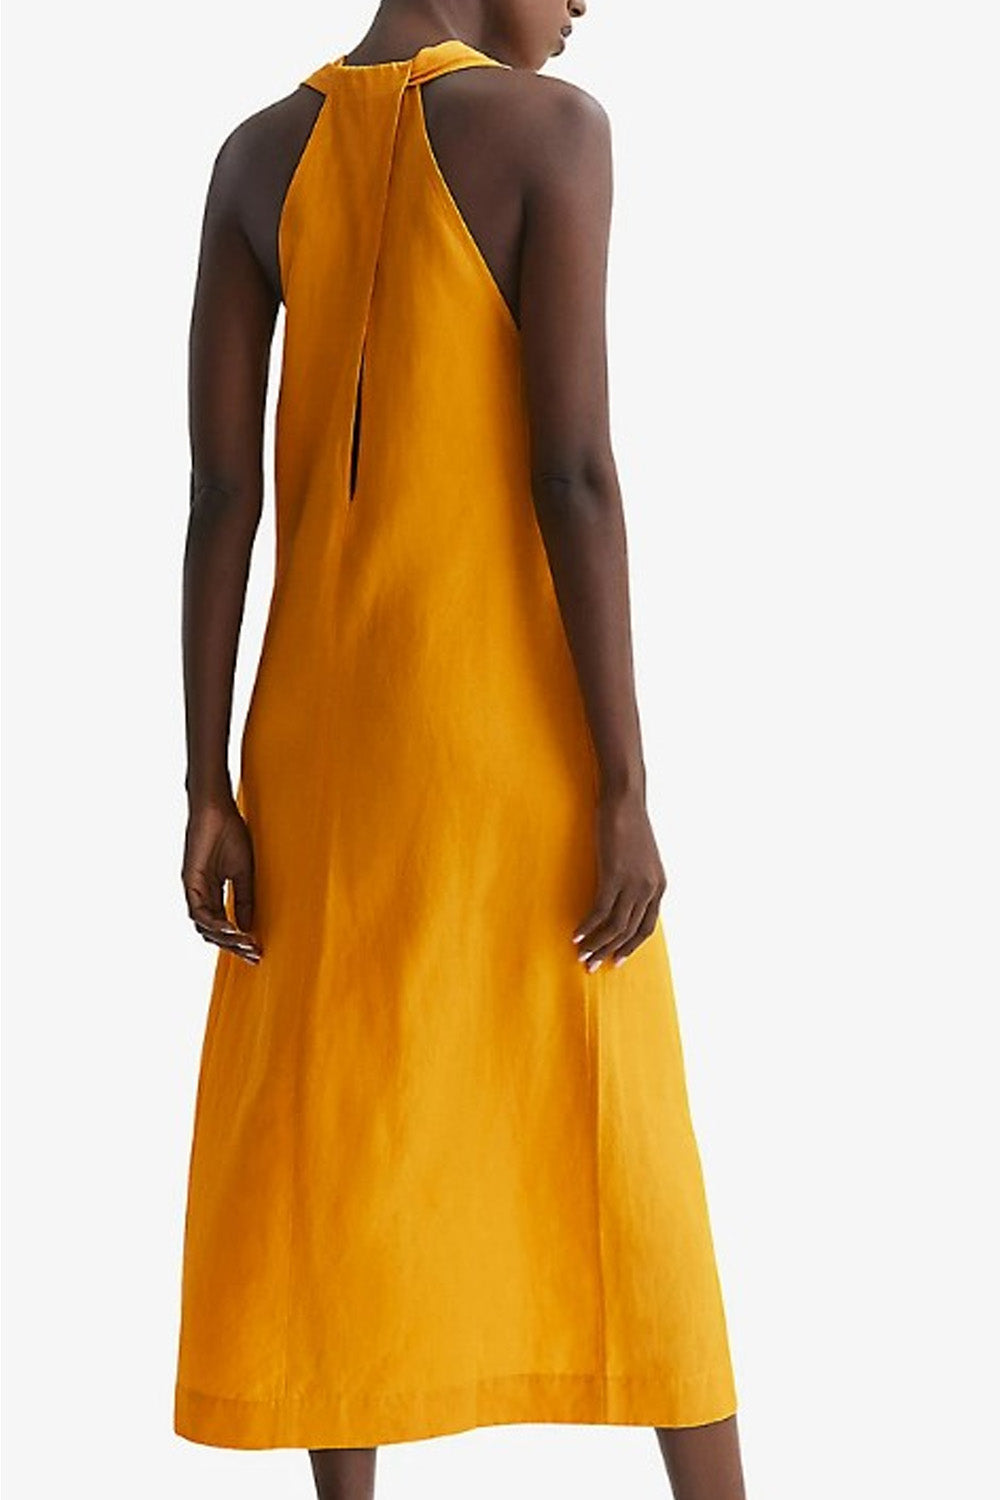 Ethereal yellow Dress